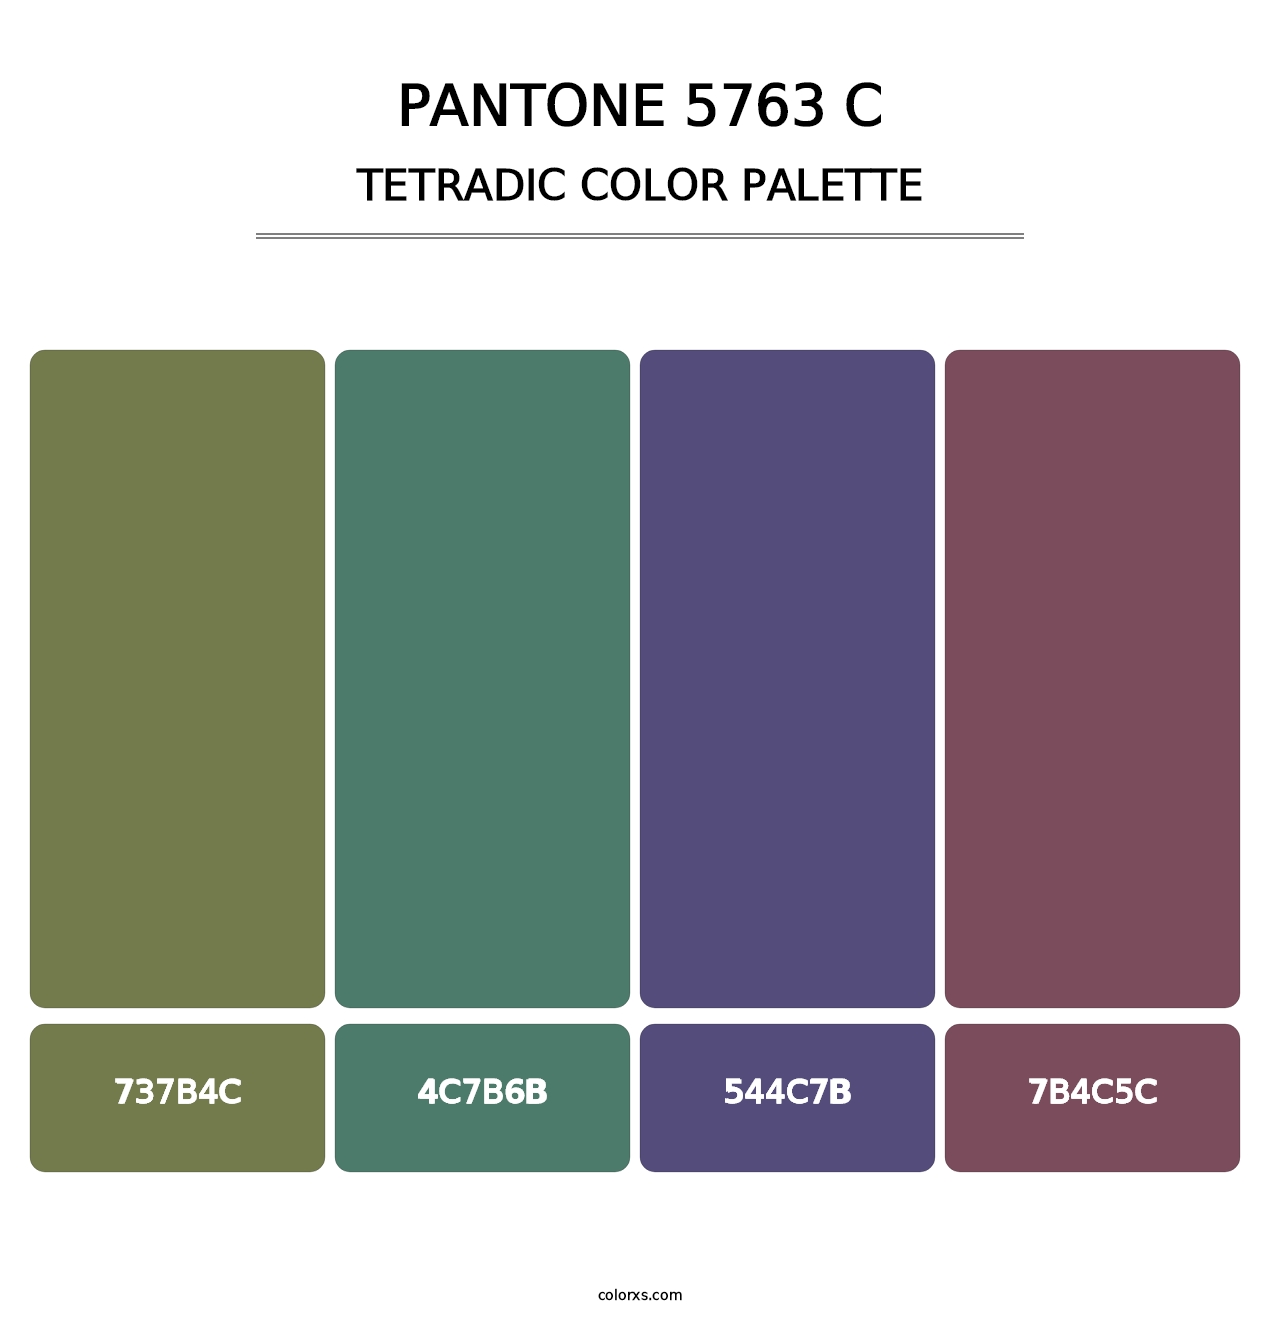 PANTONE 5763 C - Tetradic Color Palette